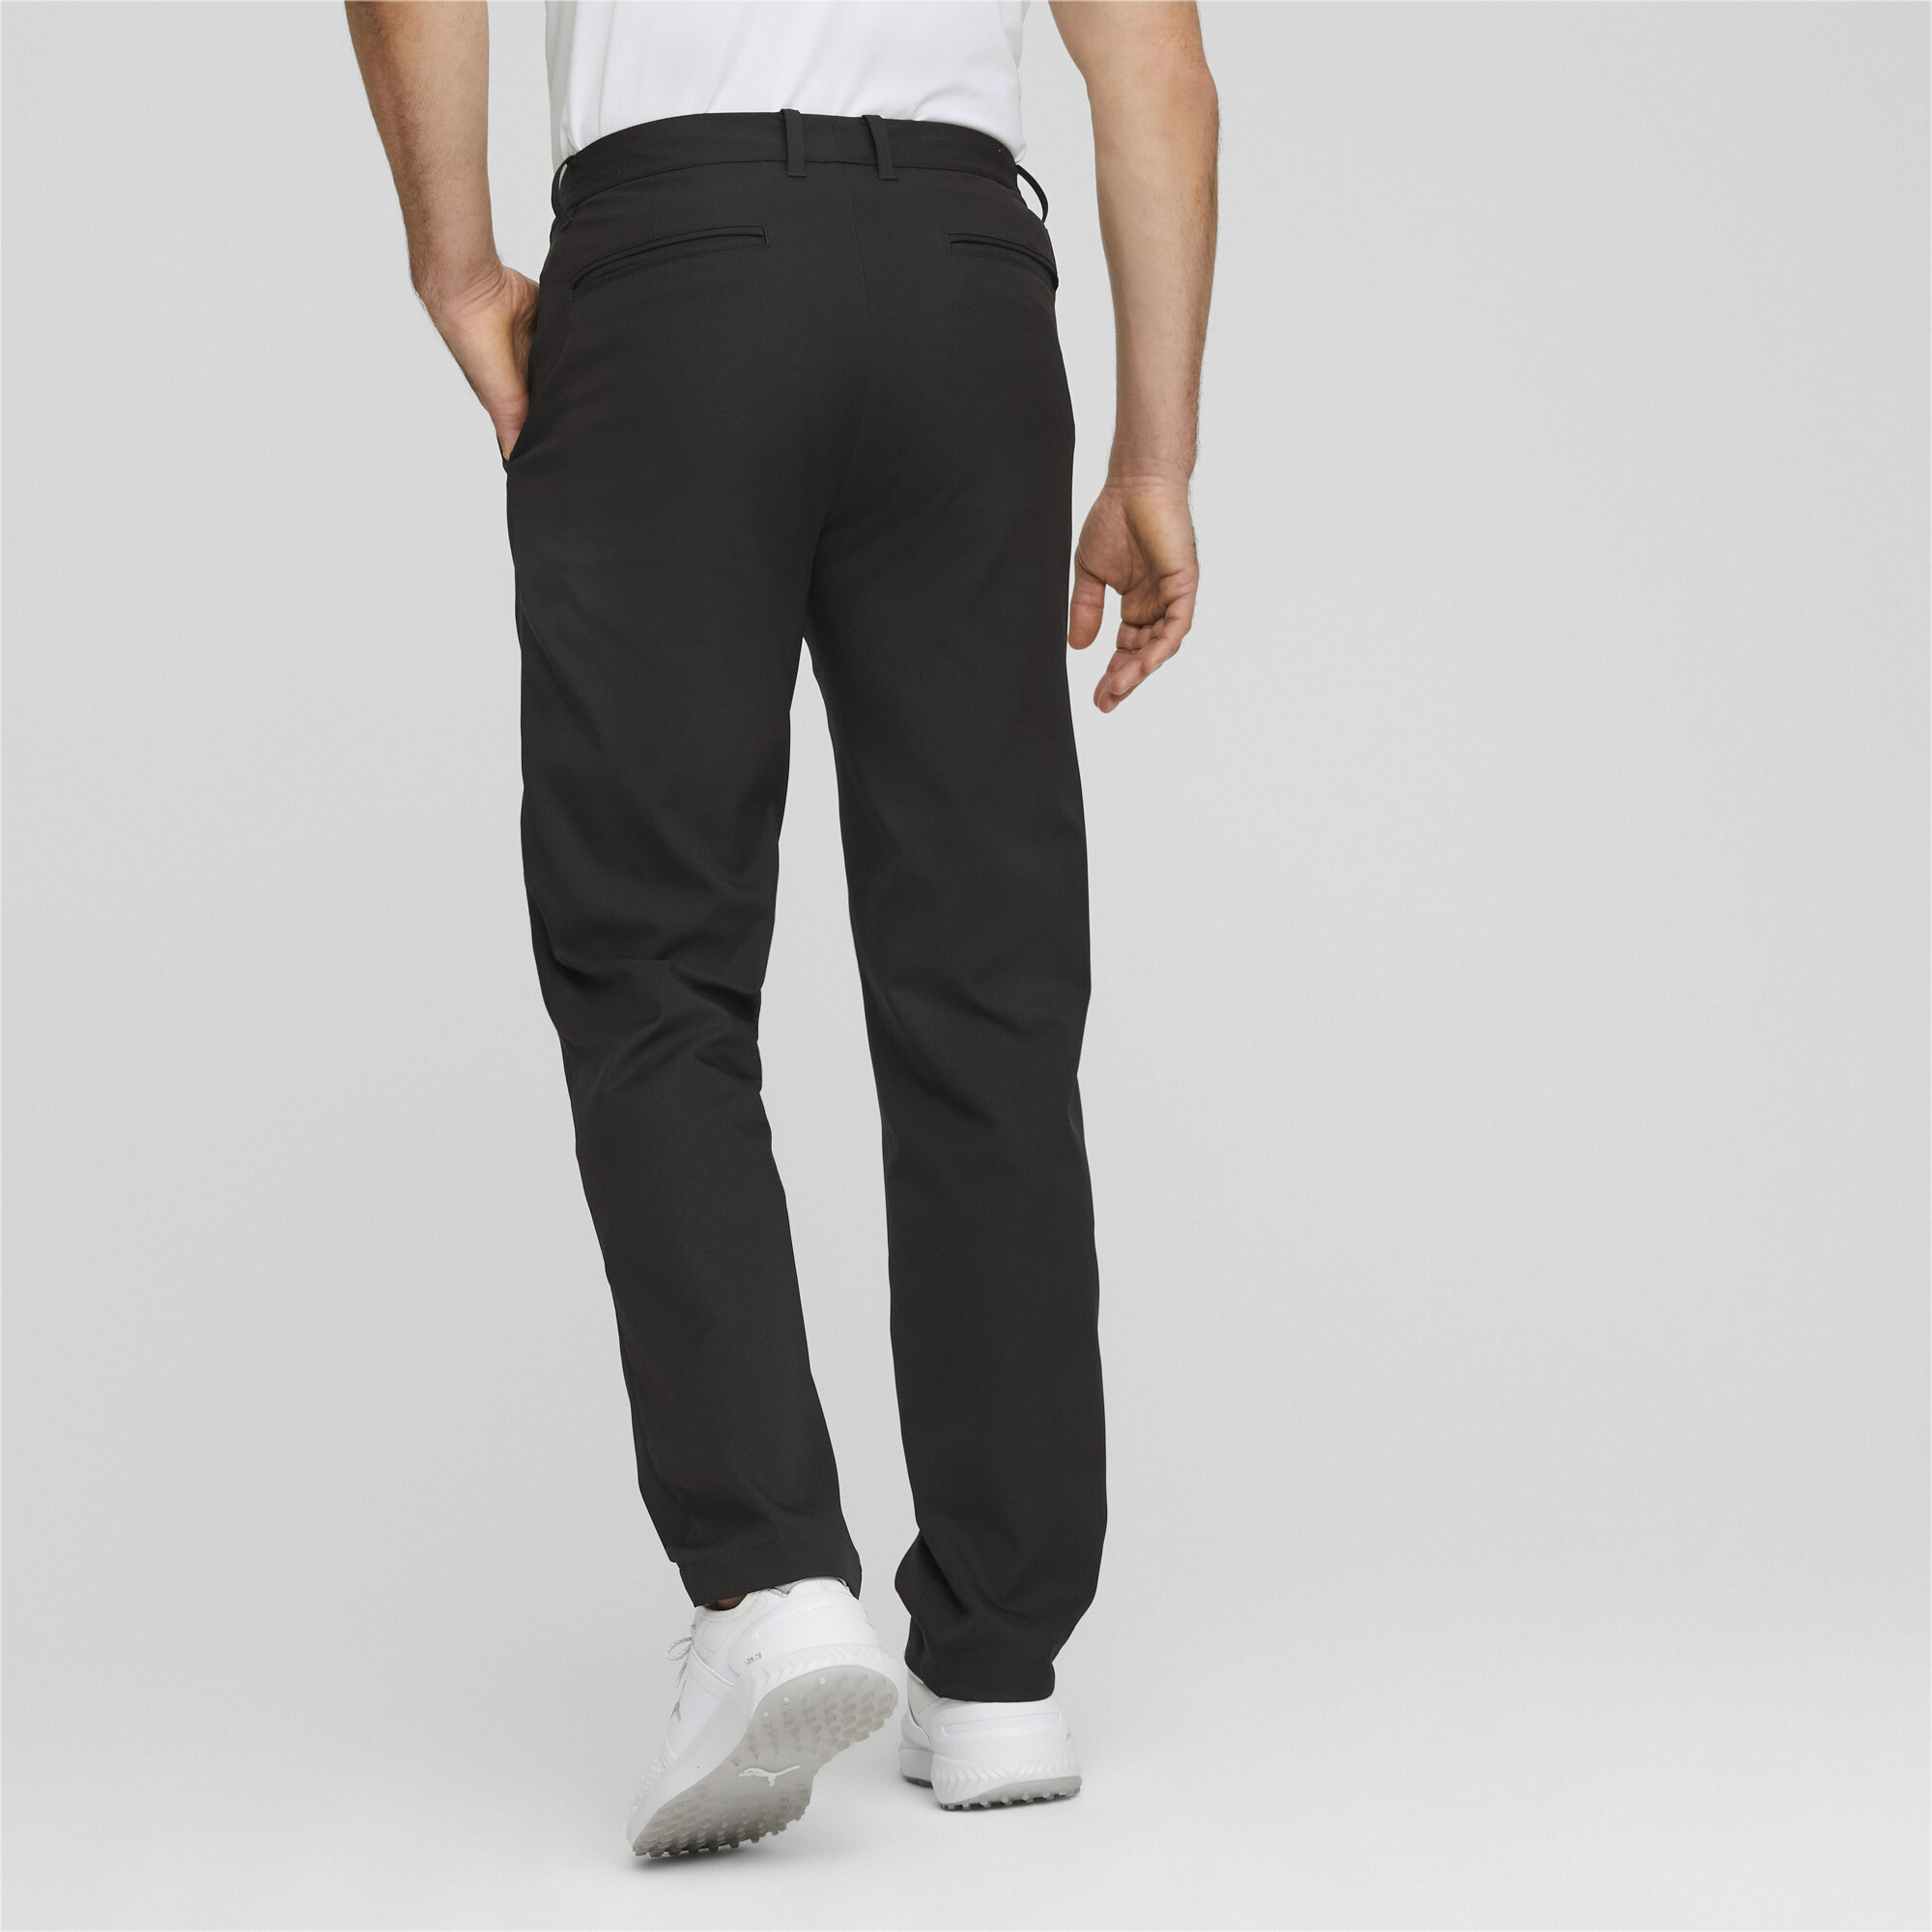 Men's Puma Dealer Golf Pants, Black, Size 34/30, Clothing